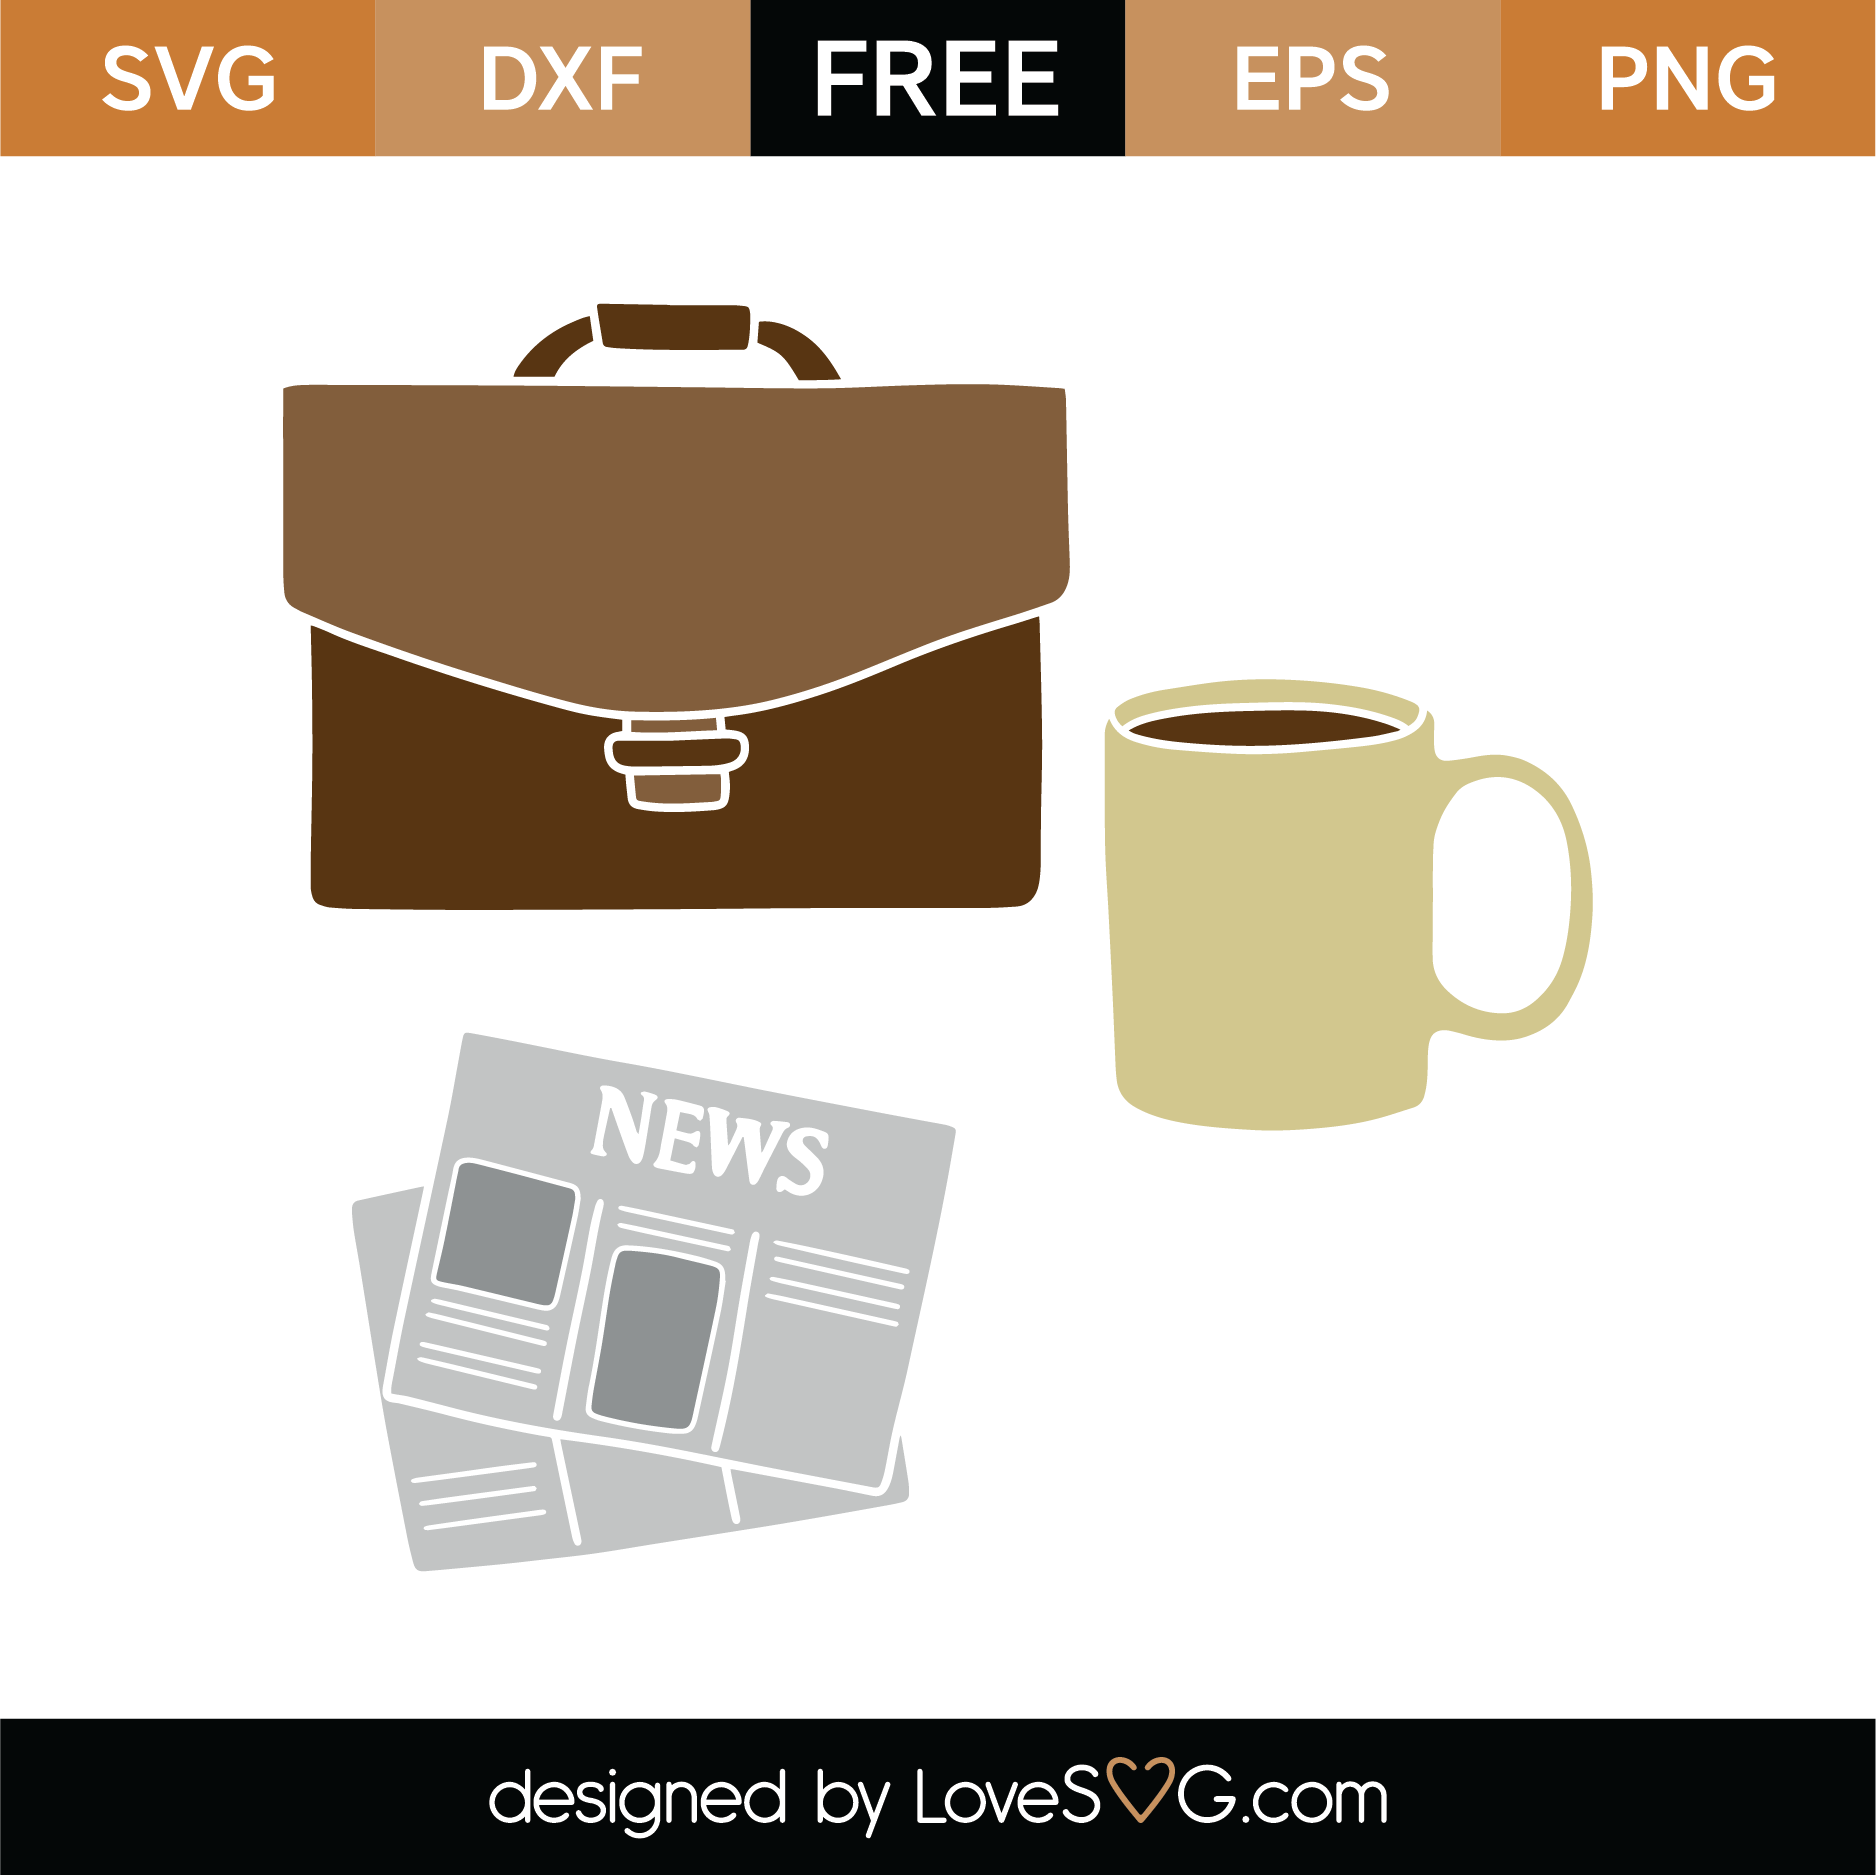 Download Free Office Items SVG Cut File | Lovesvg.com